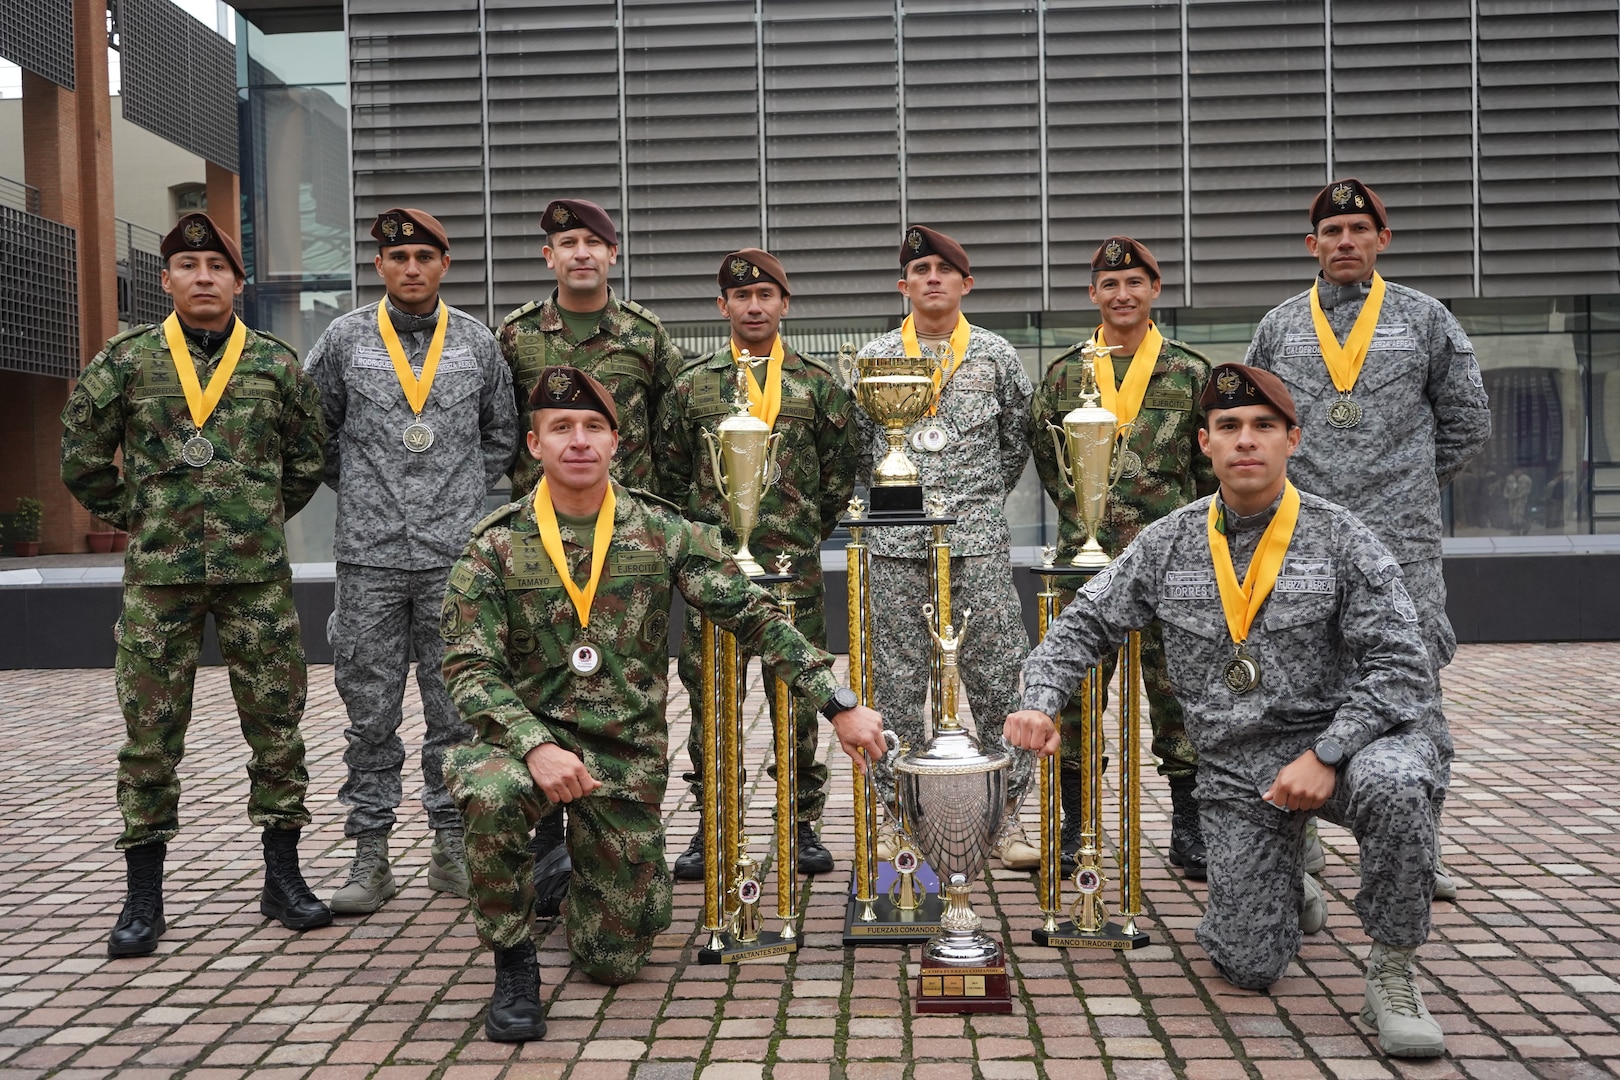 Comandos Colombia pose with their trophy after a closing ceremony held for Fuerzas Comando 2019.